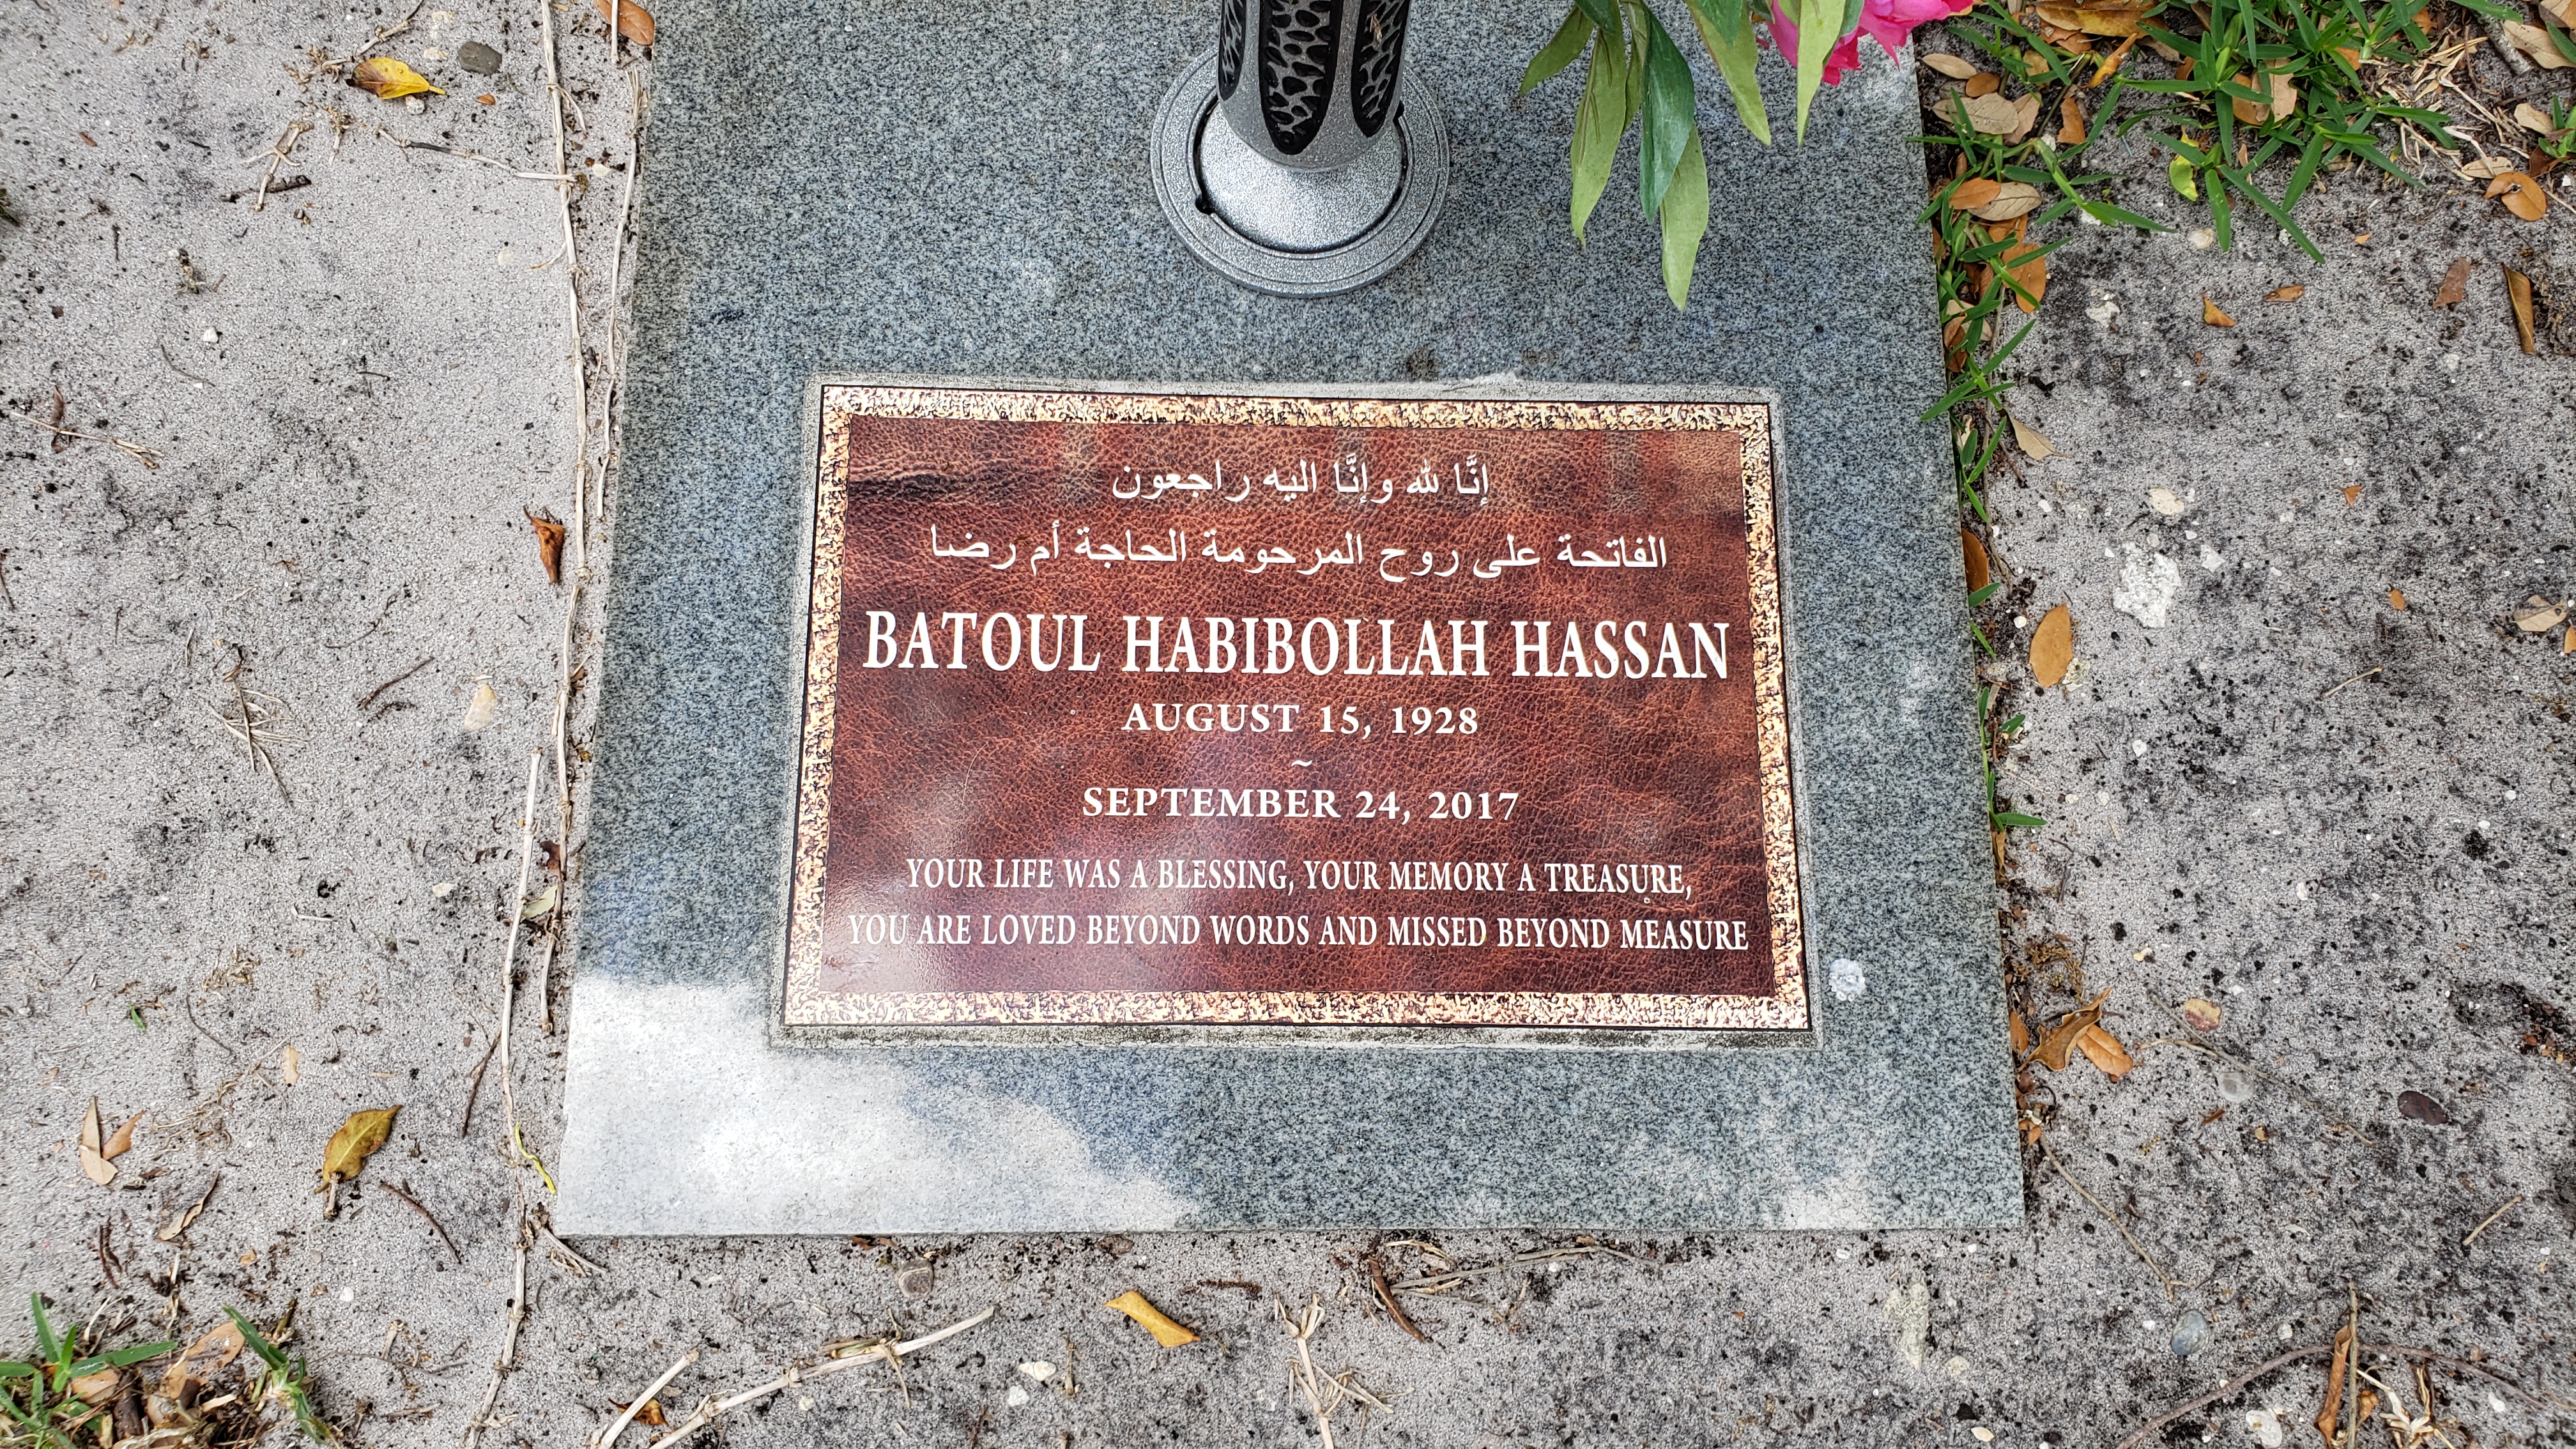 Batoul Habibollah Hassan